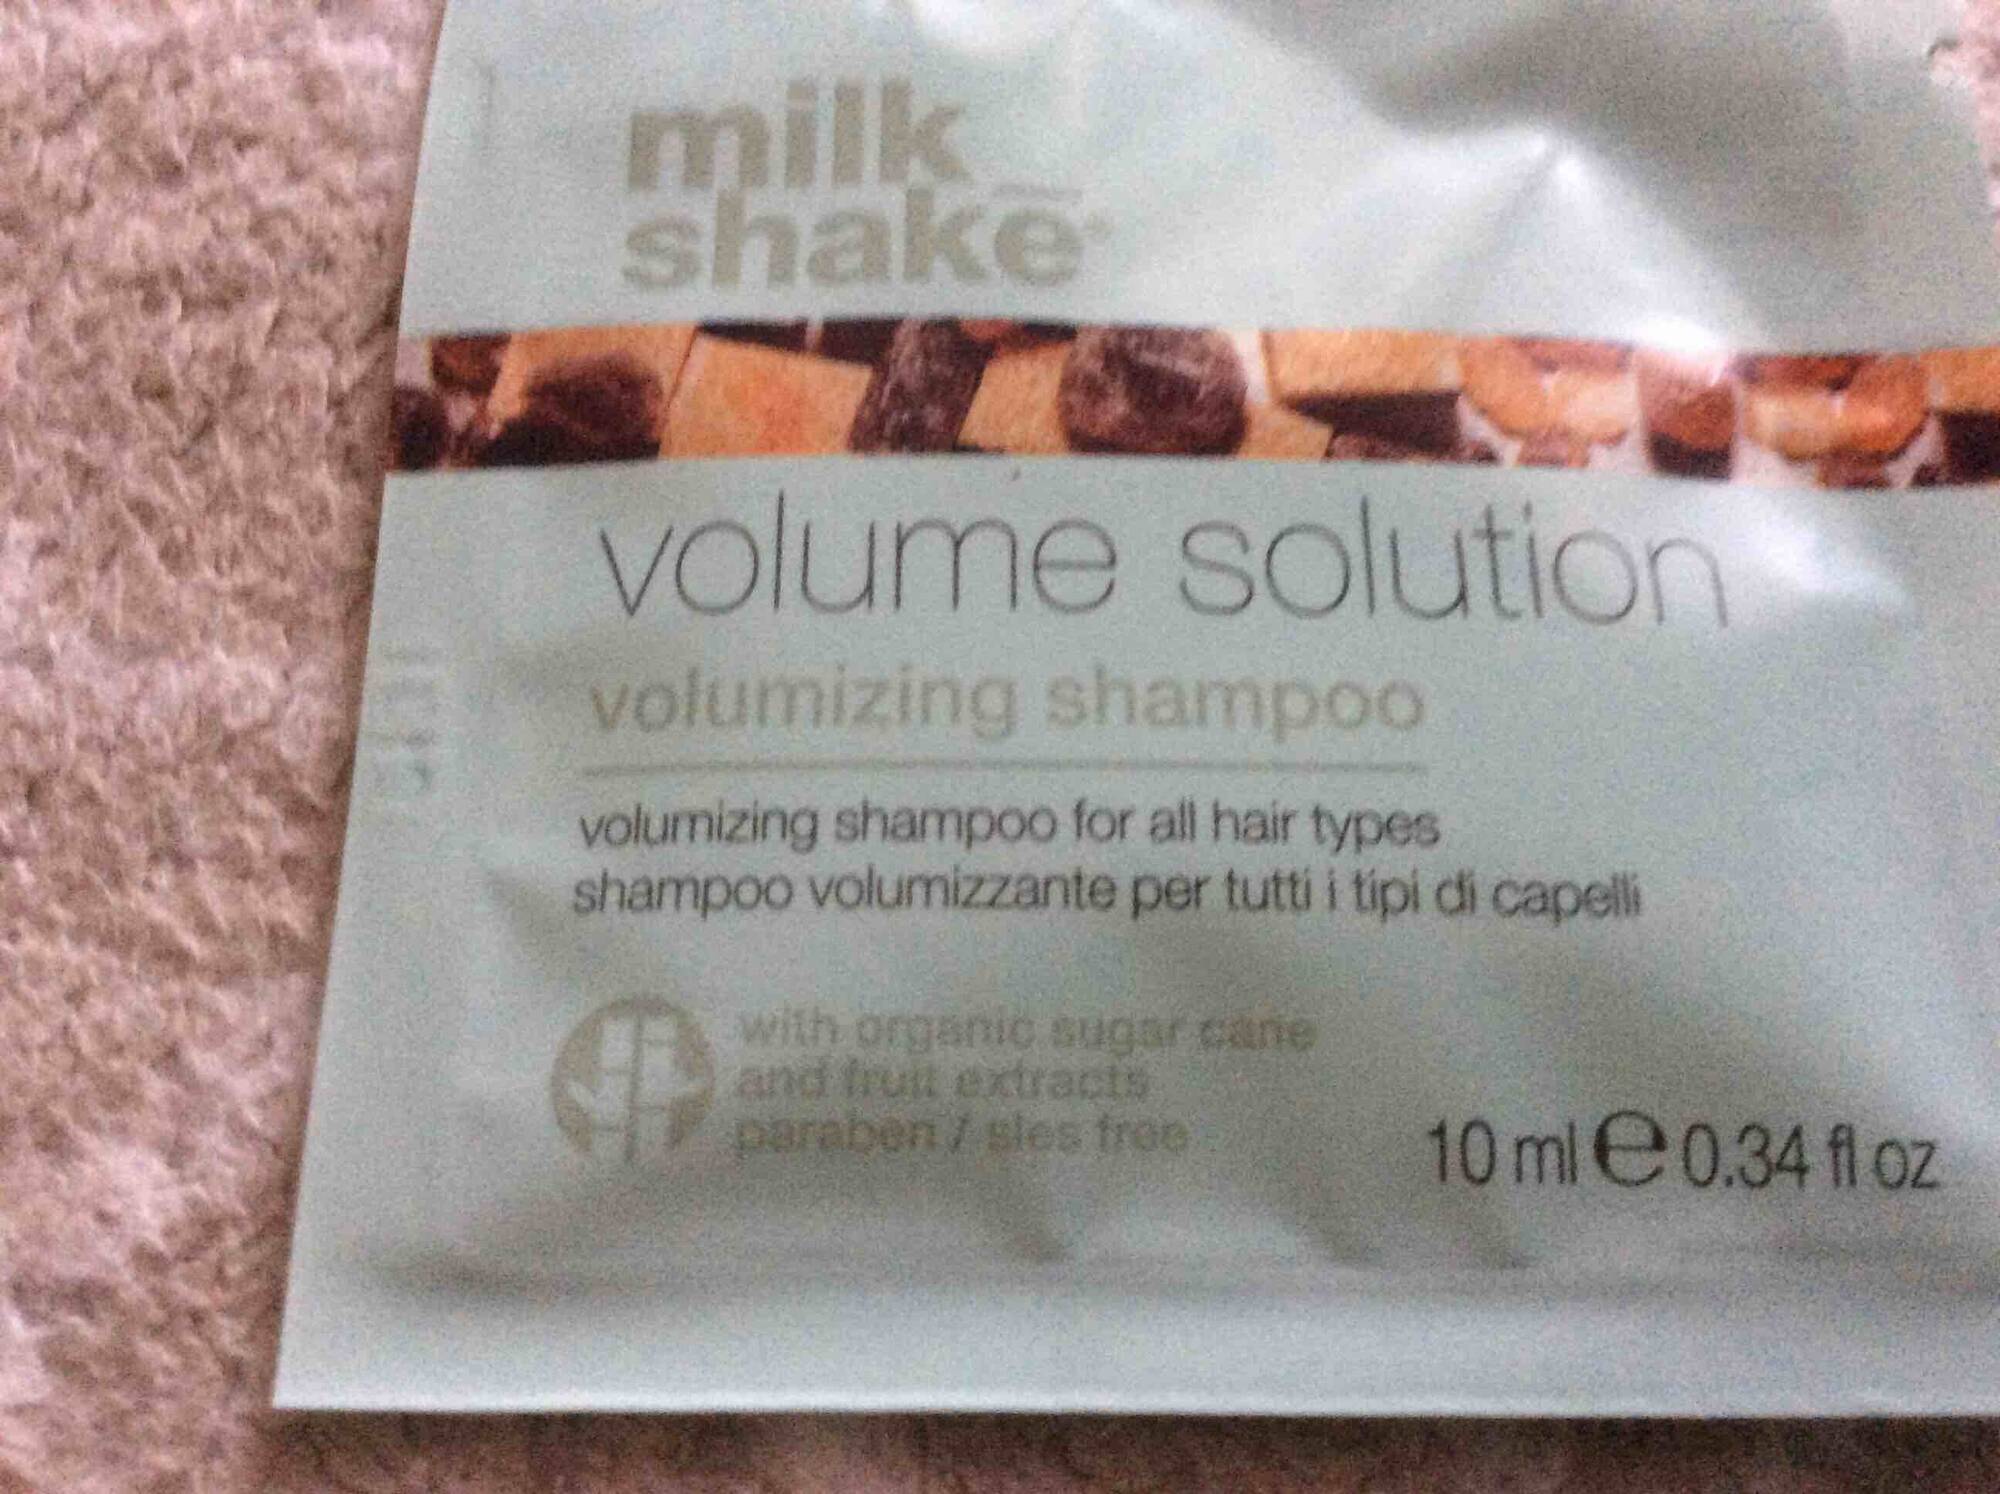 MILK SHAKE - Volume solution - Volumizing shampoo